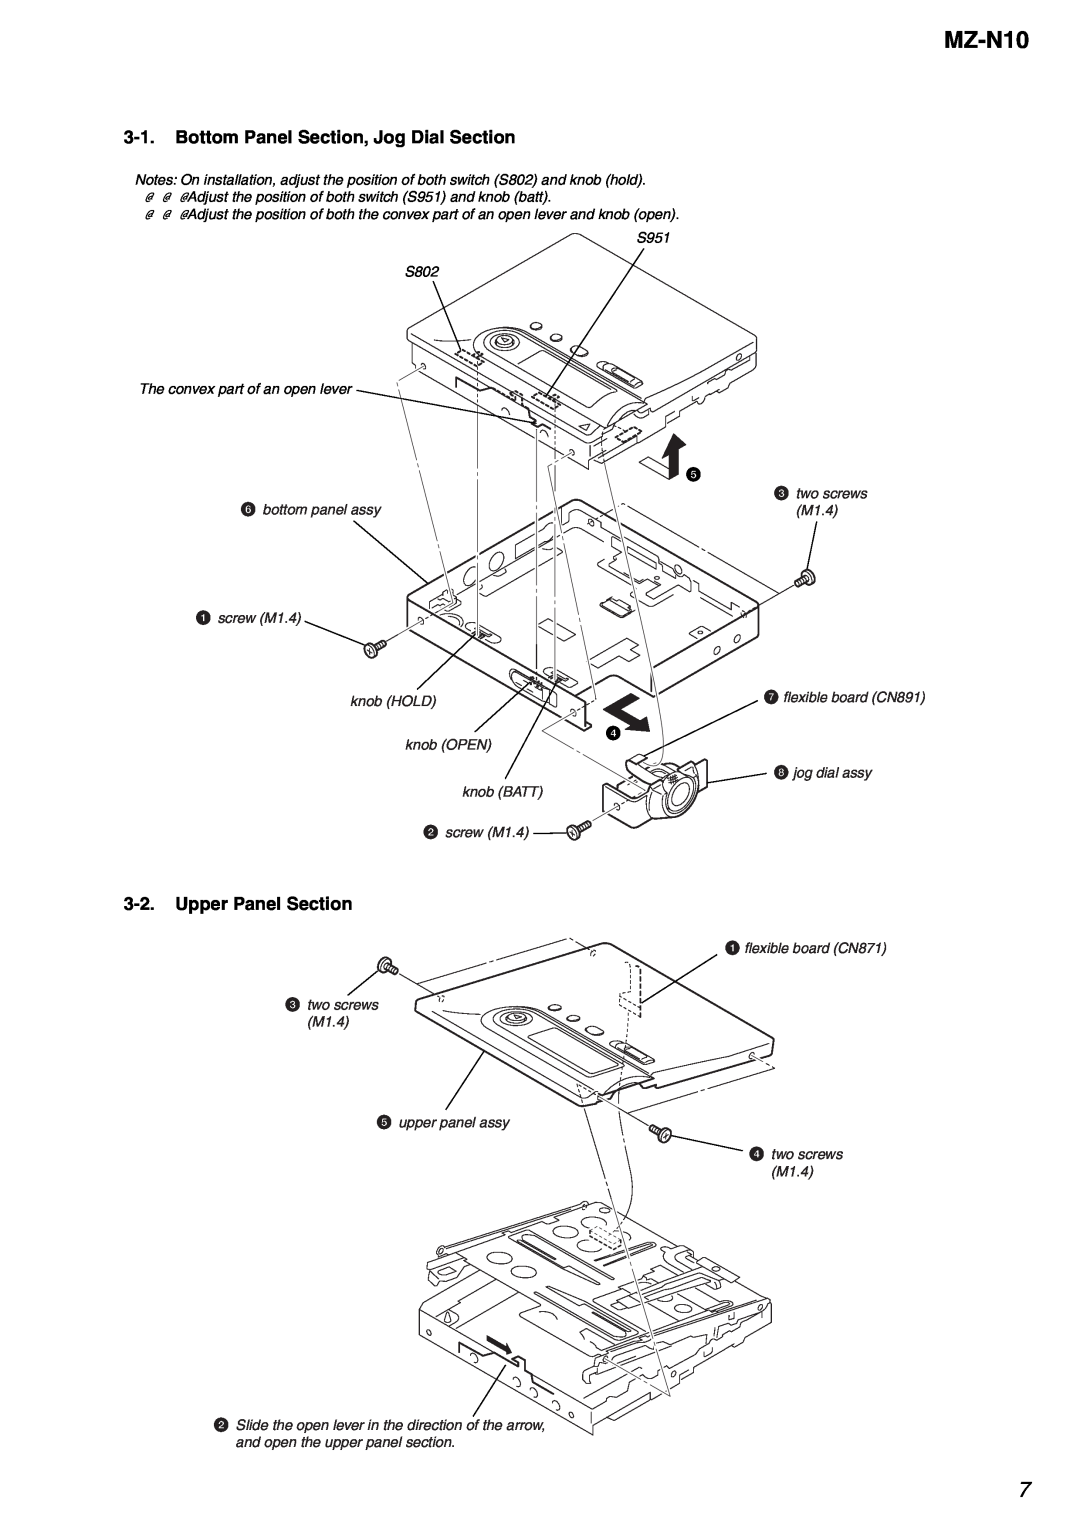 Sony MZ-N10 Bottom Panel Section, Jog Dial Section, Upper Panel Section, 6bottom panel assy 1 screw M1.4, 3two screws M1.4 